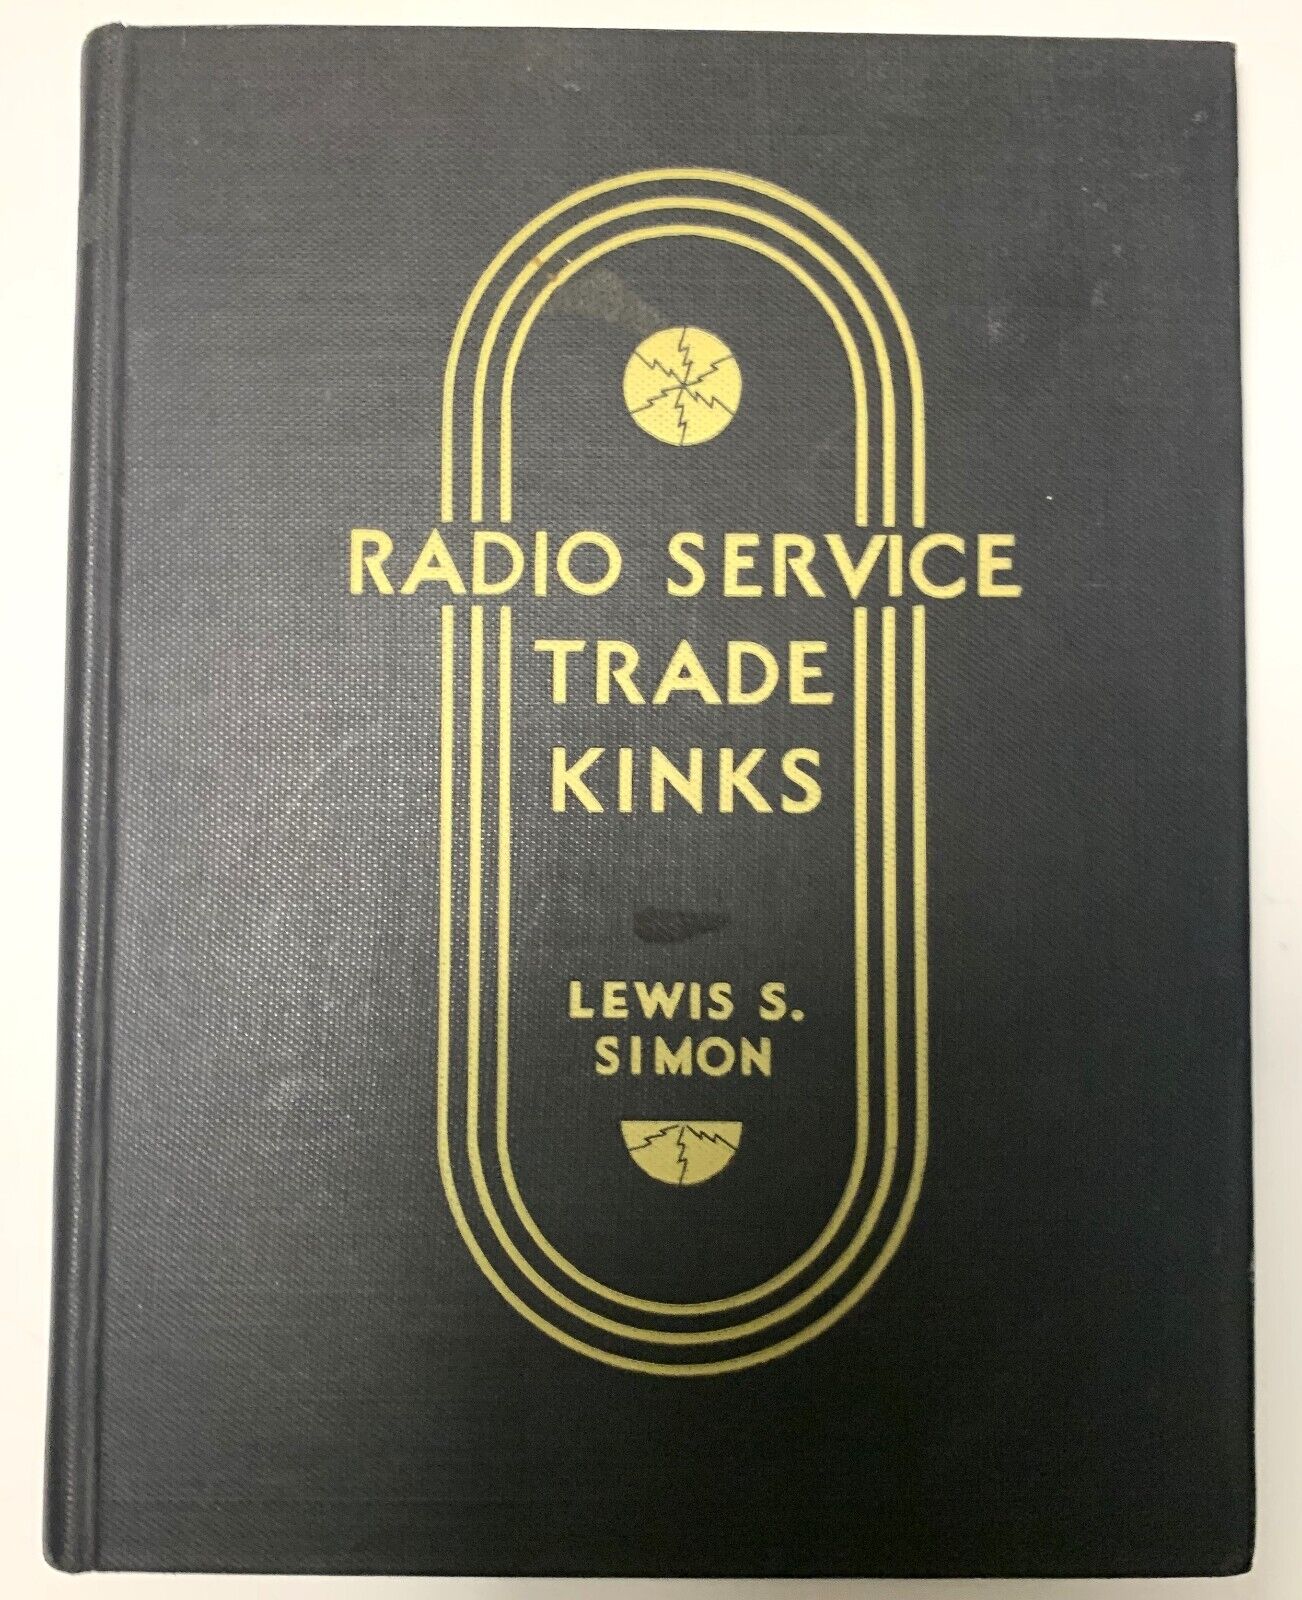 1939 RADIO SERVICE TRADE KINKS by LEWIS SIMON -Vintage Antique Radio Repair book